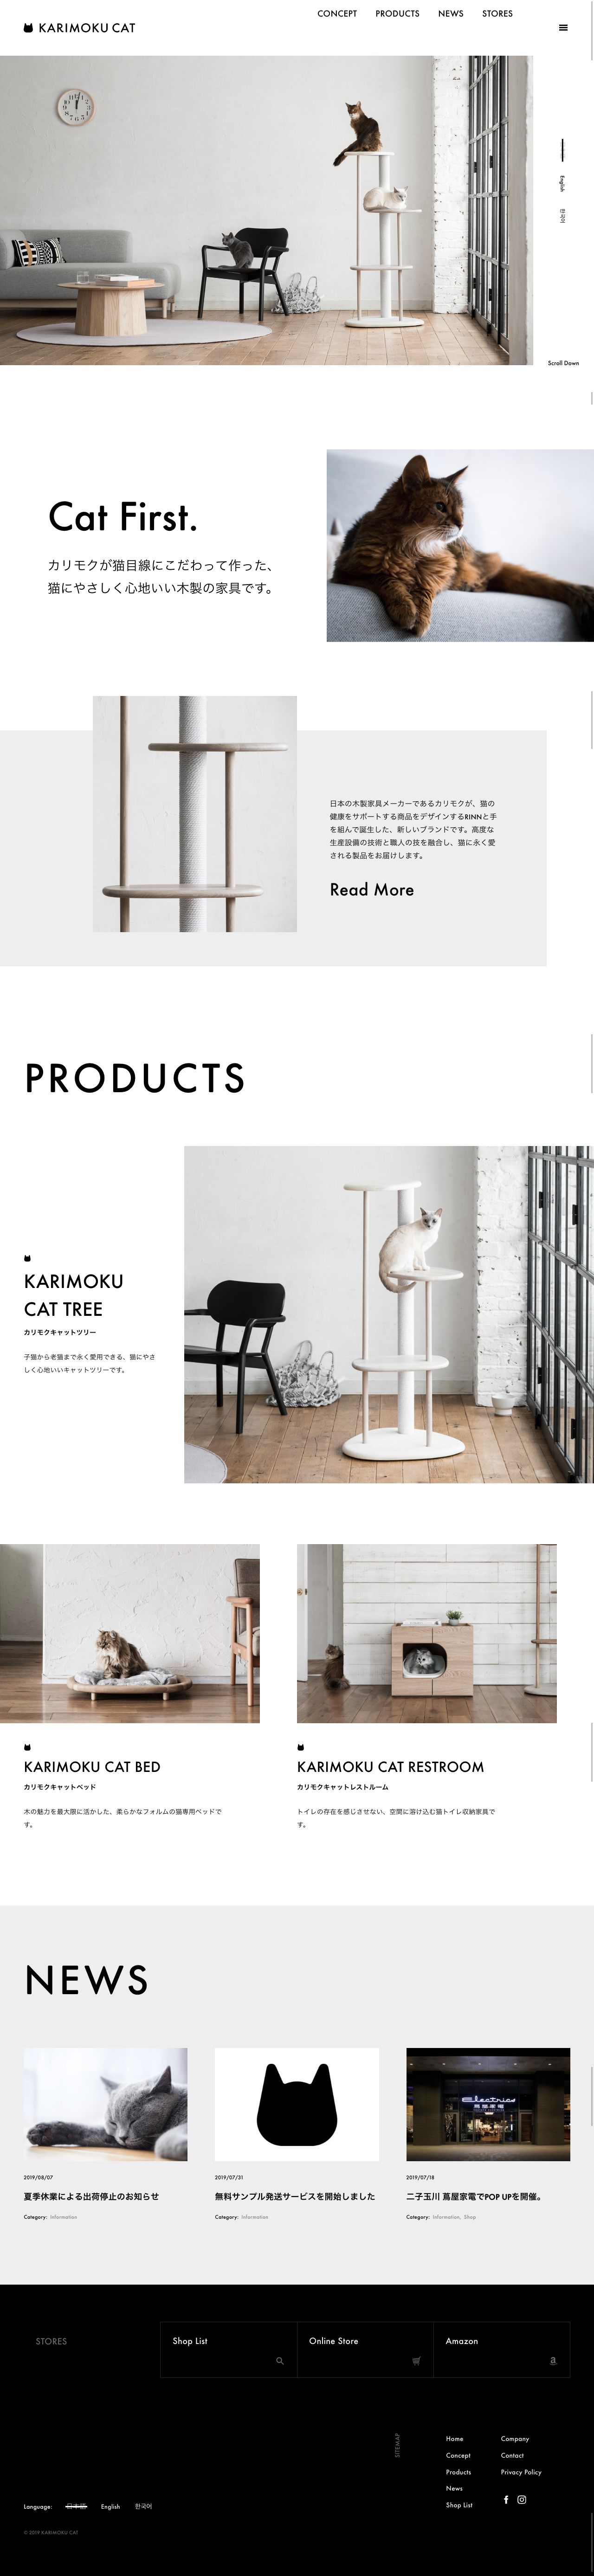 KARIMOKU CAT - カリモクの猫用木製家具のスクリーンショット - トップページ